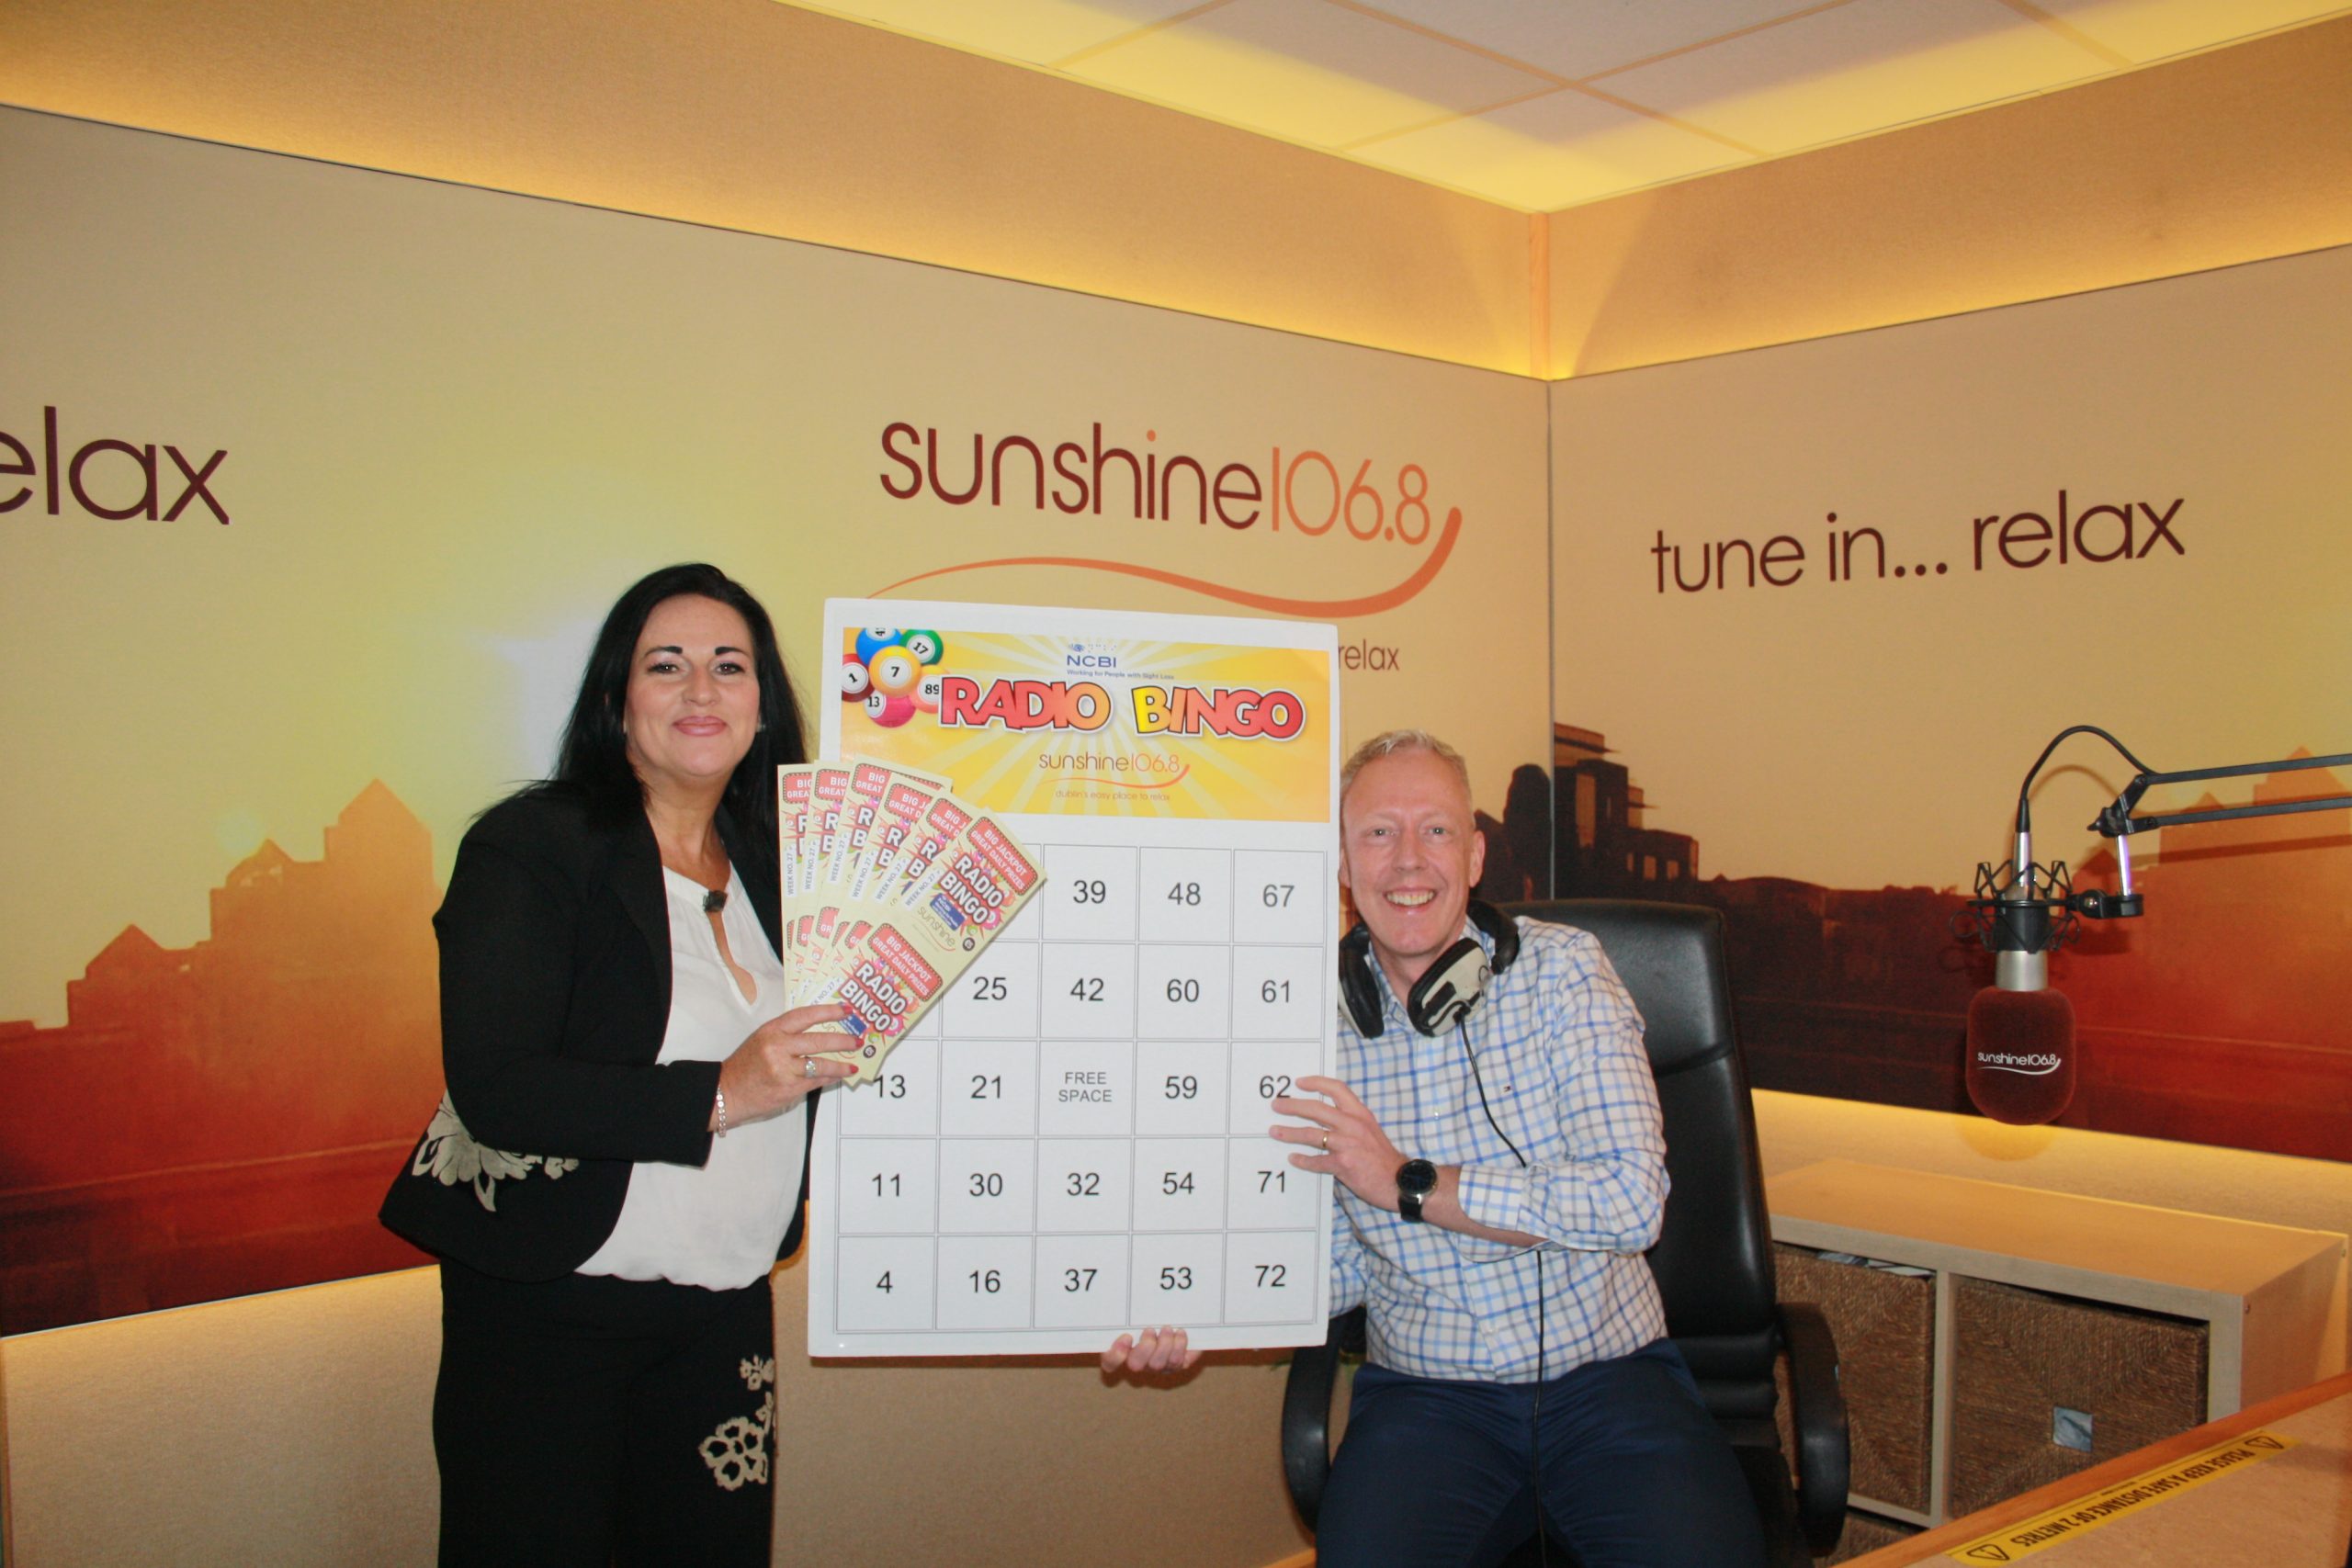 Sunshine 106.8 presenter Robbie Fogerty with Vision Ireland Fundraiser Sharon Fallon - Radio Bingo